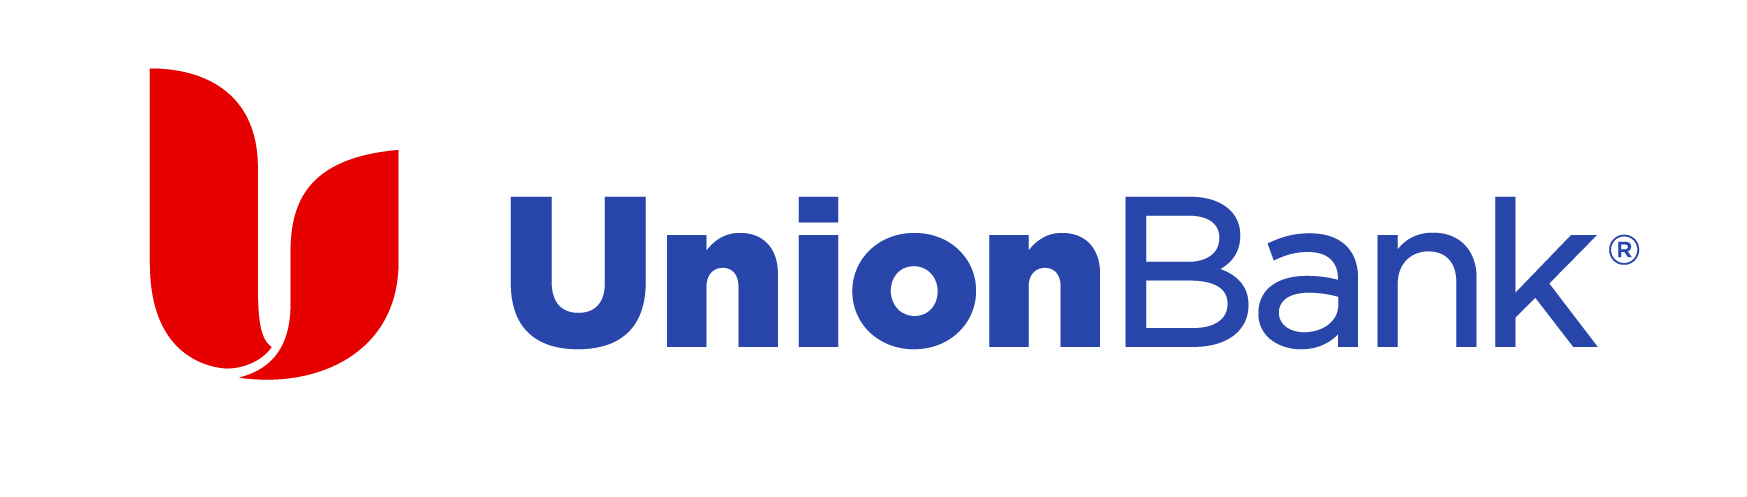 union-bank-logo-1.jpg